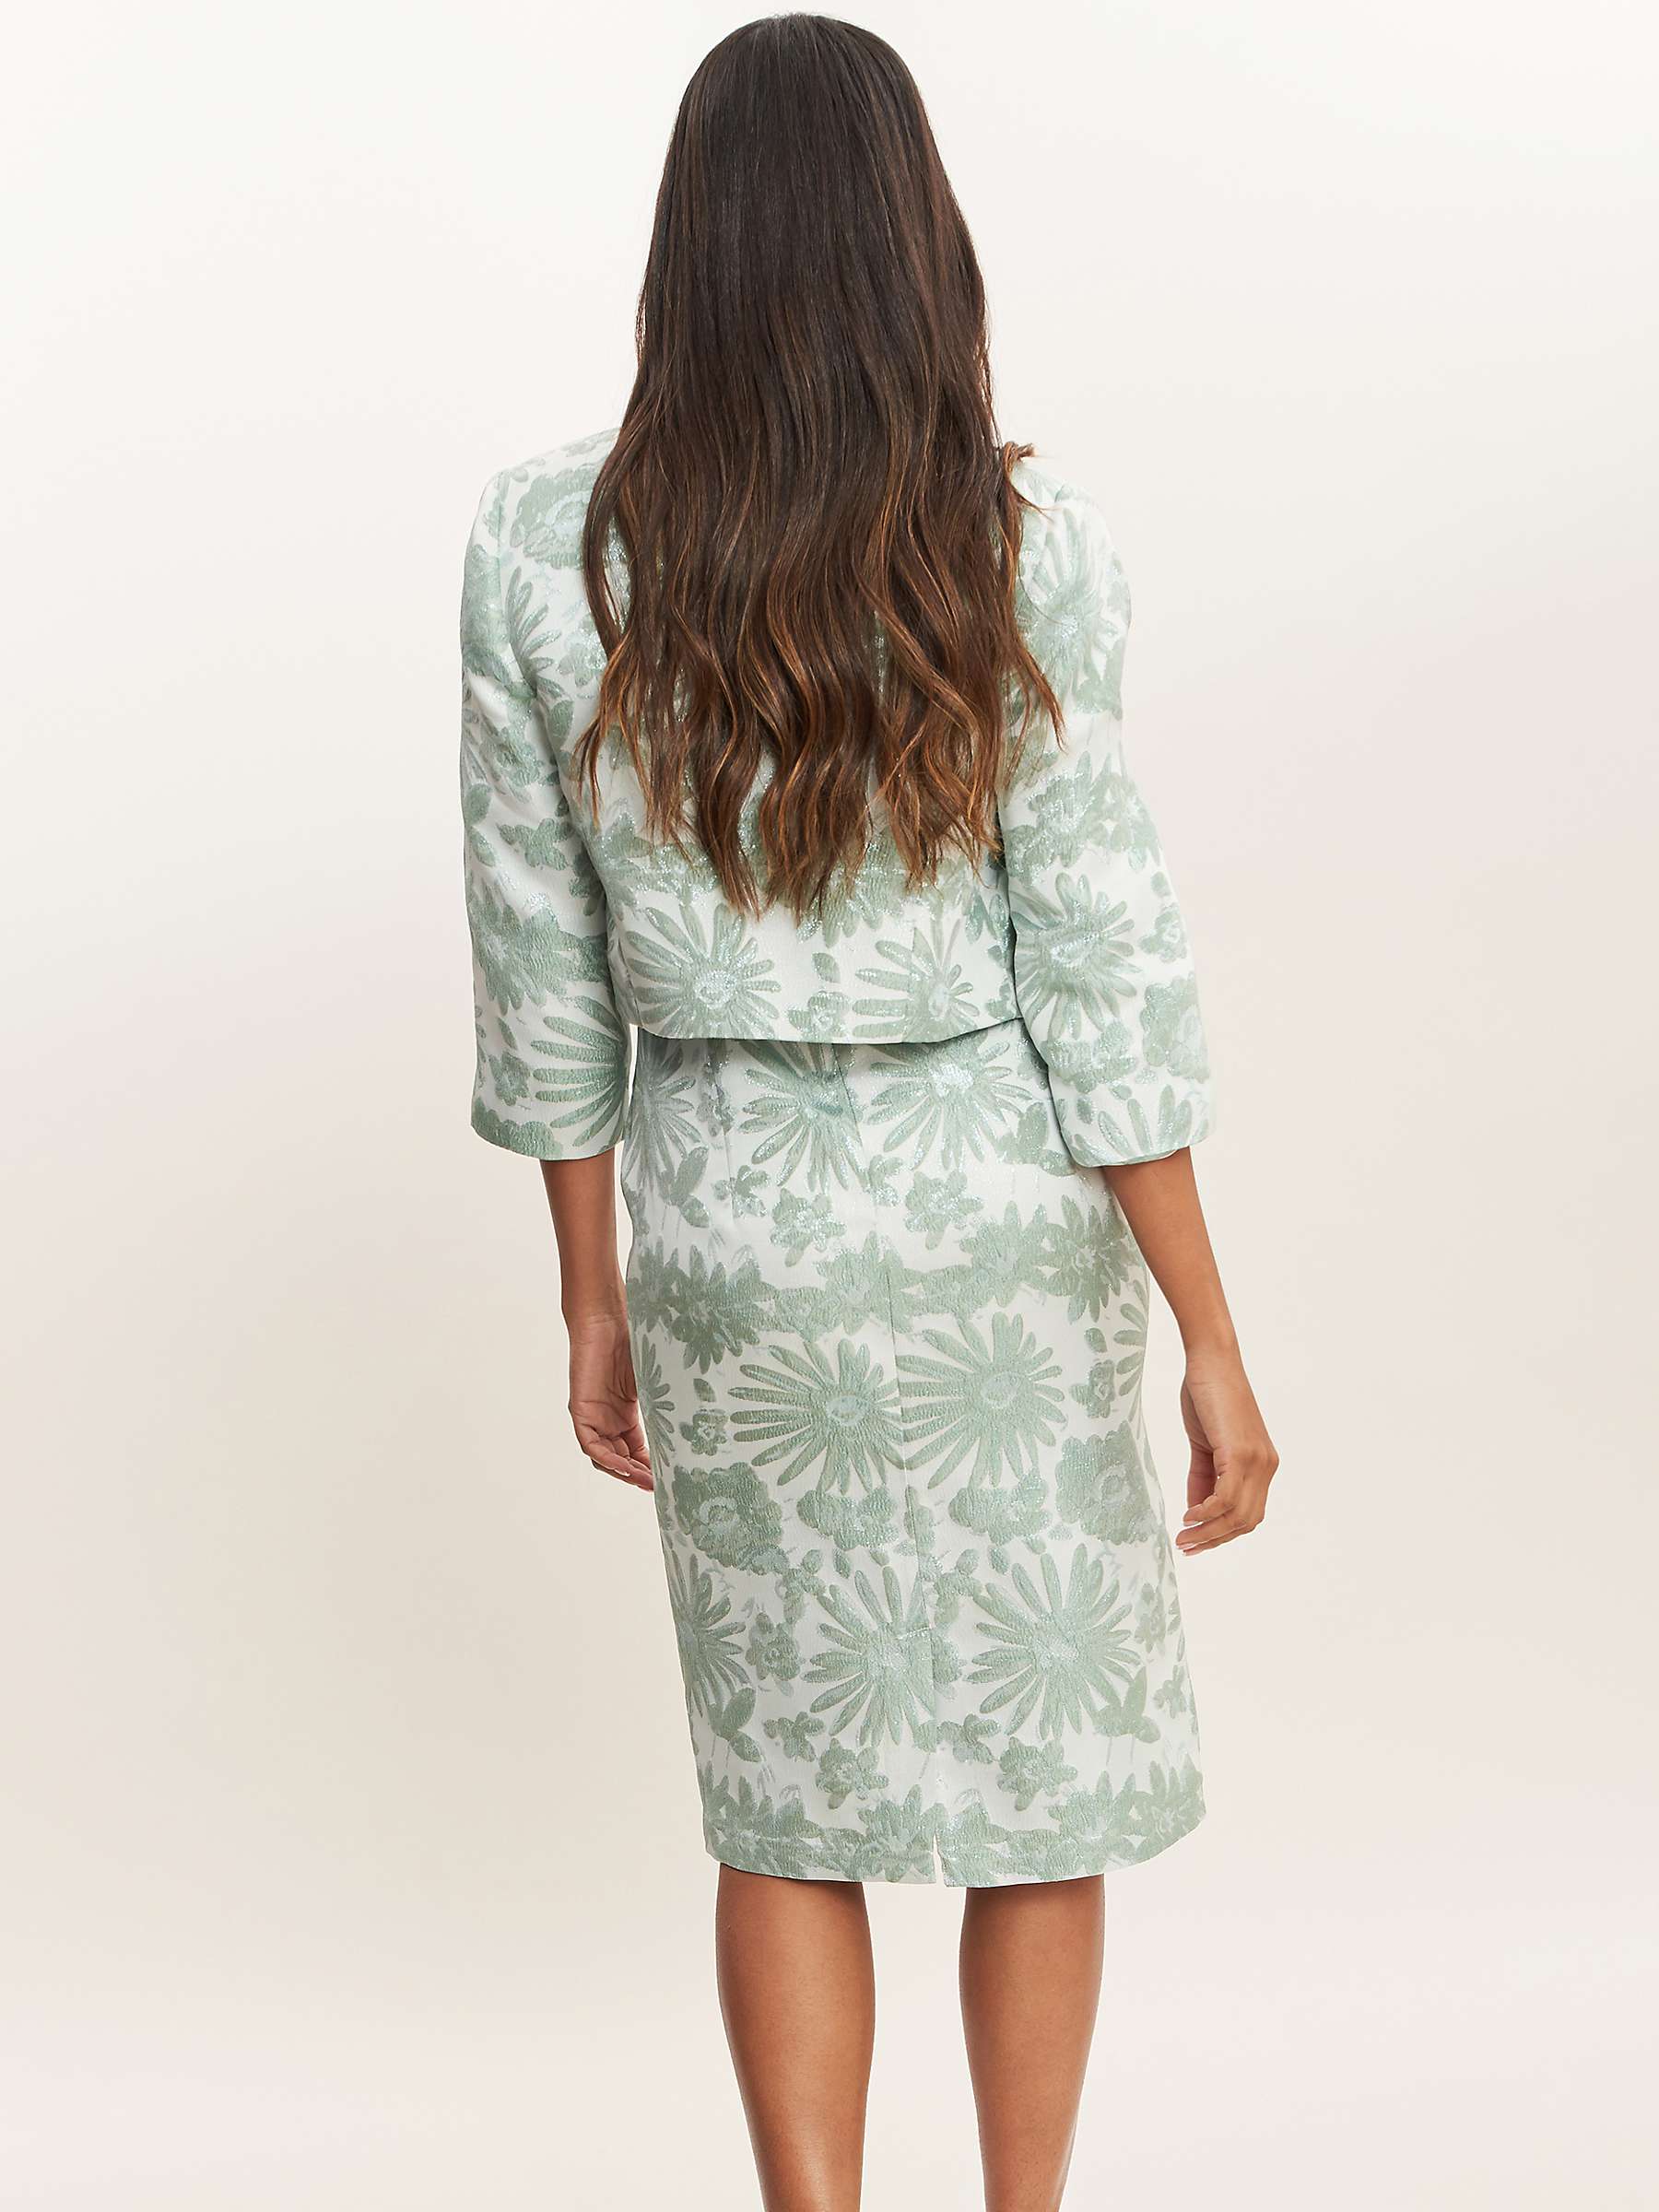 Buy Gina Bacconi Emeline Jacquard Tailored Dress Online at johnlewis.com